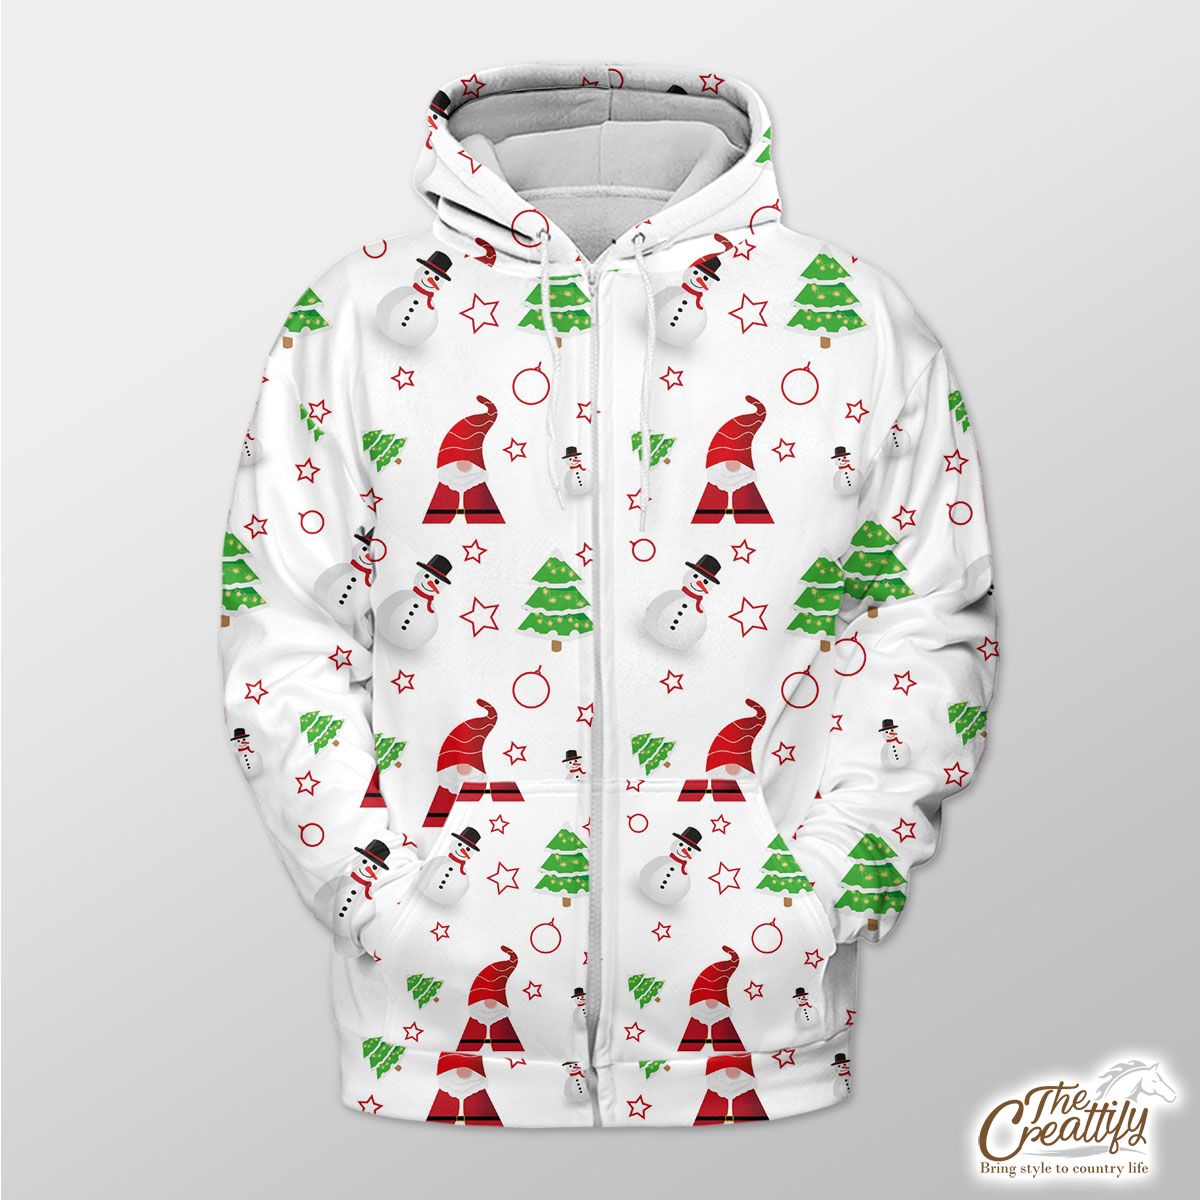 Santa Claus, Snowman Clipart And Pine Tree Silhouette Seamless Pattern Zip Hoodie